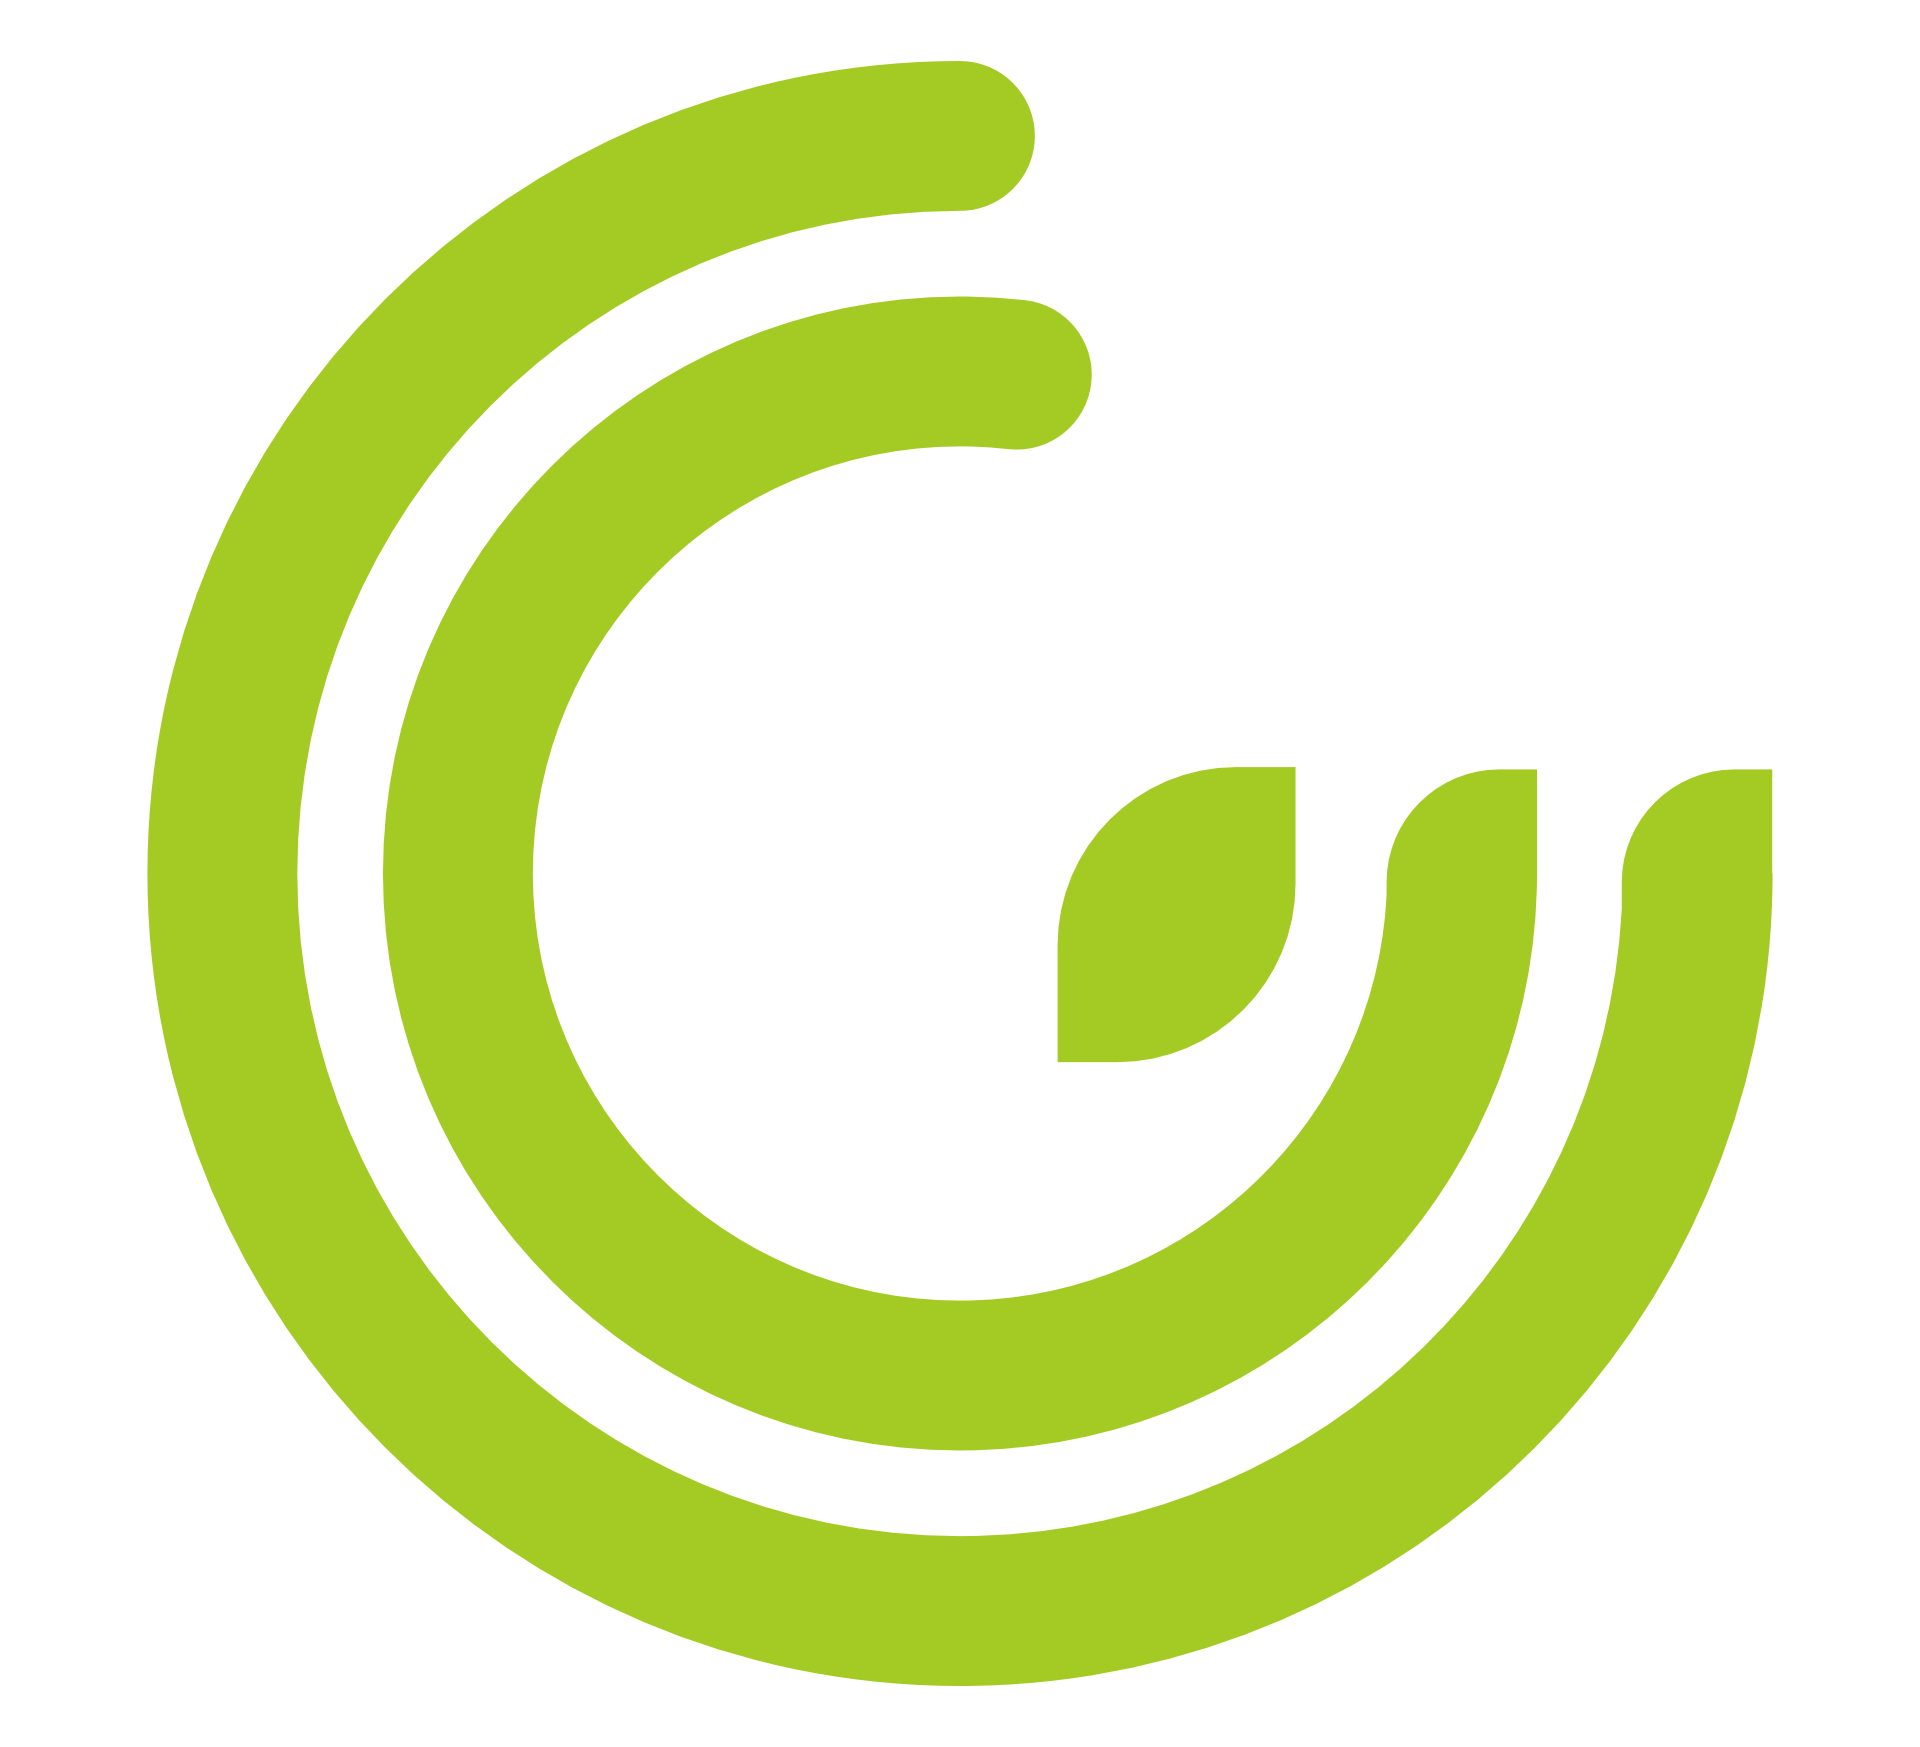 greenpass GmbH